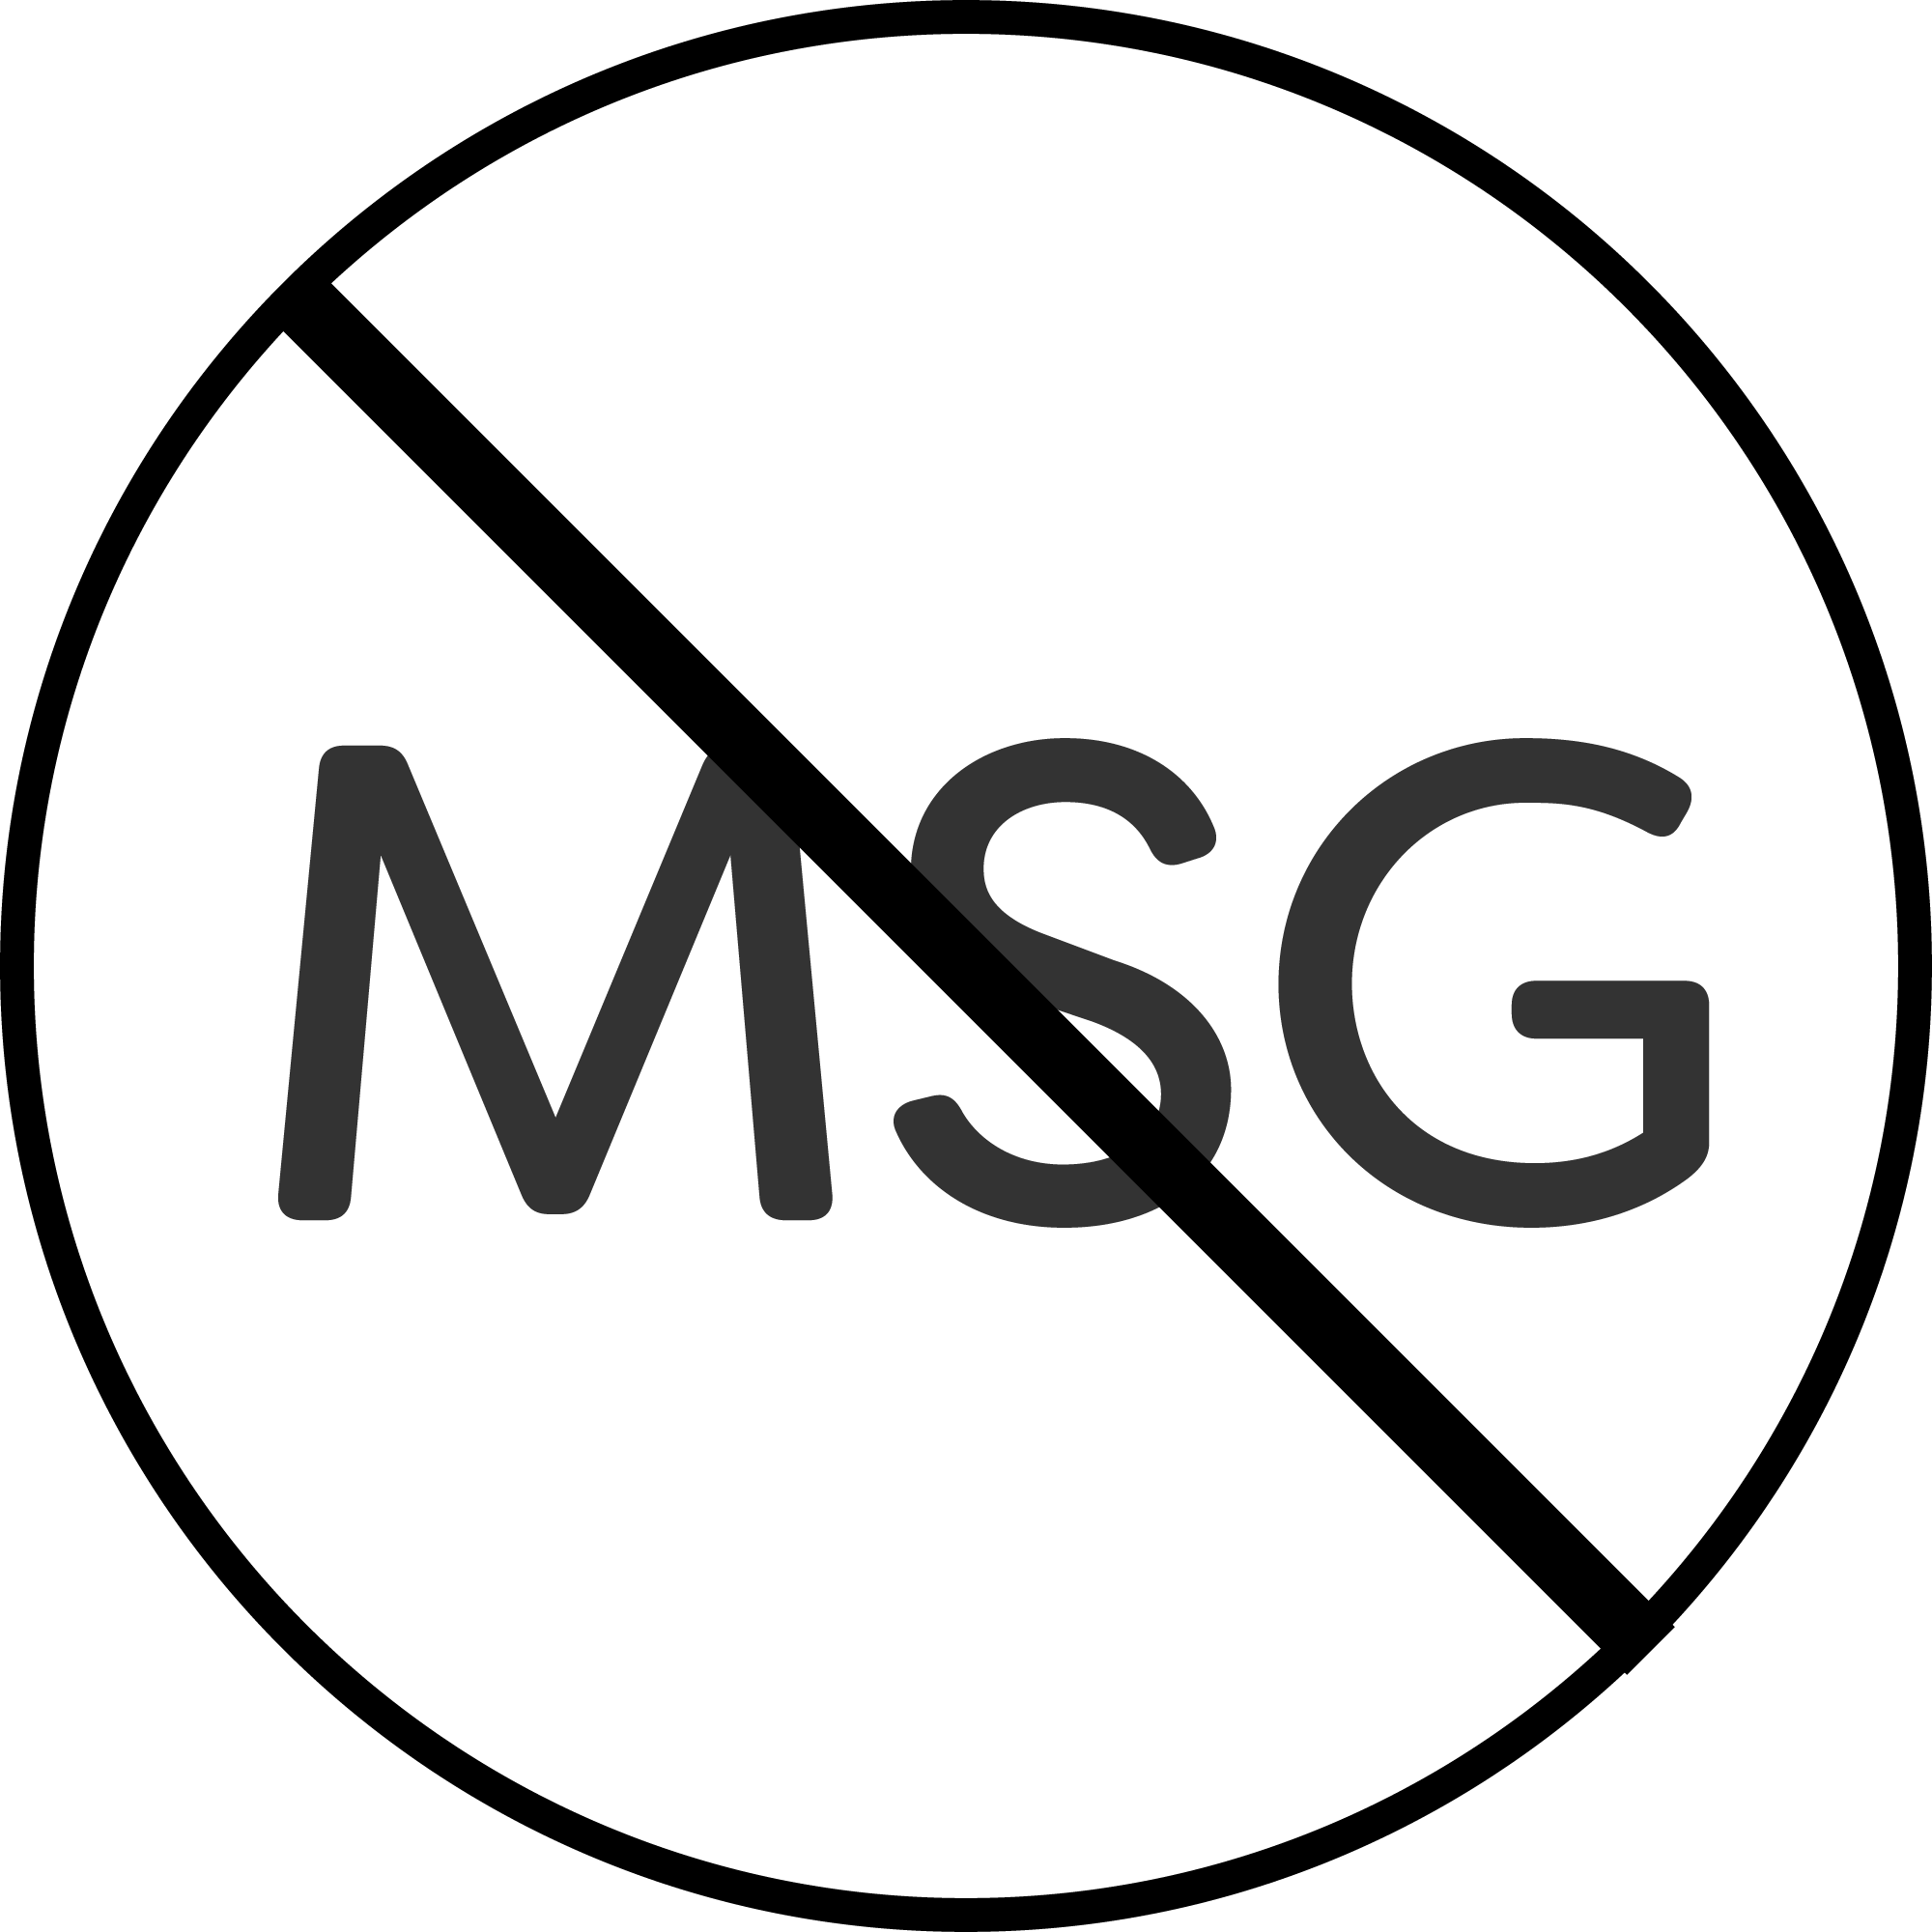 Illustration of No MSG